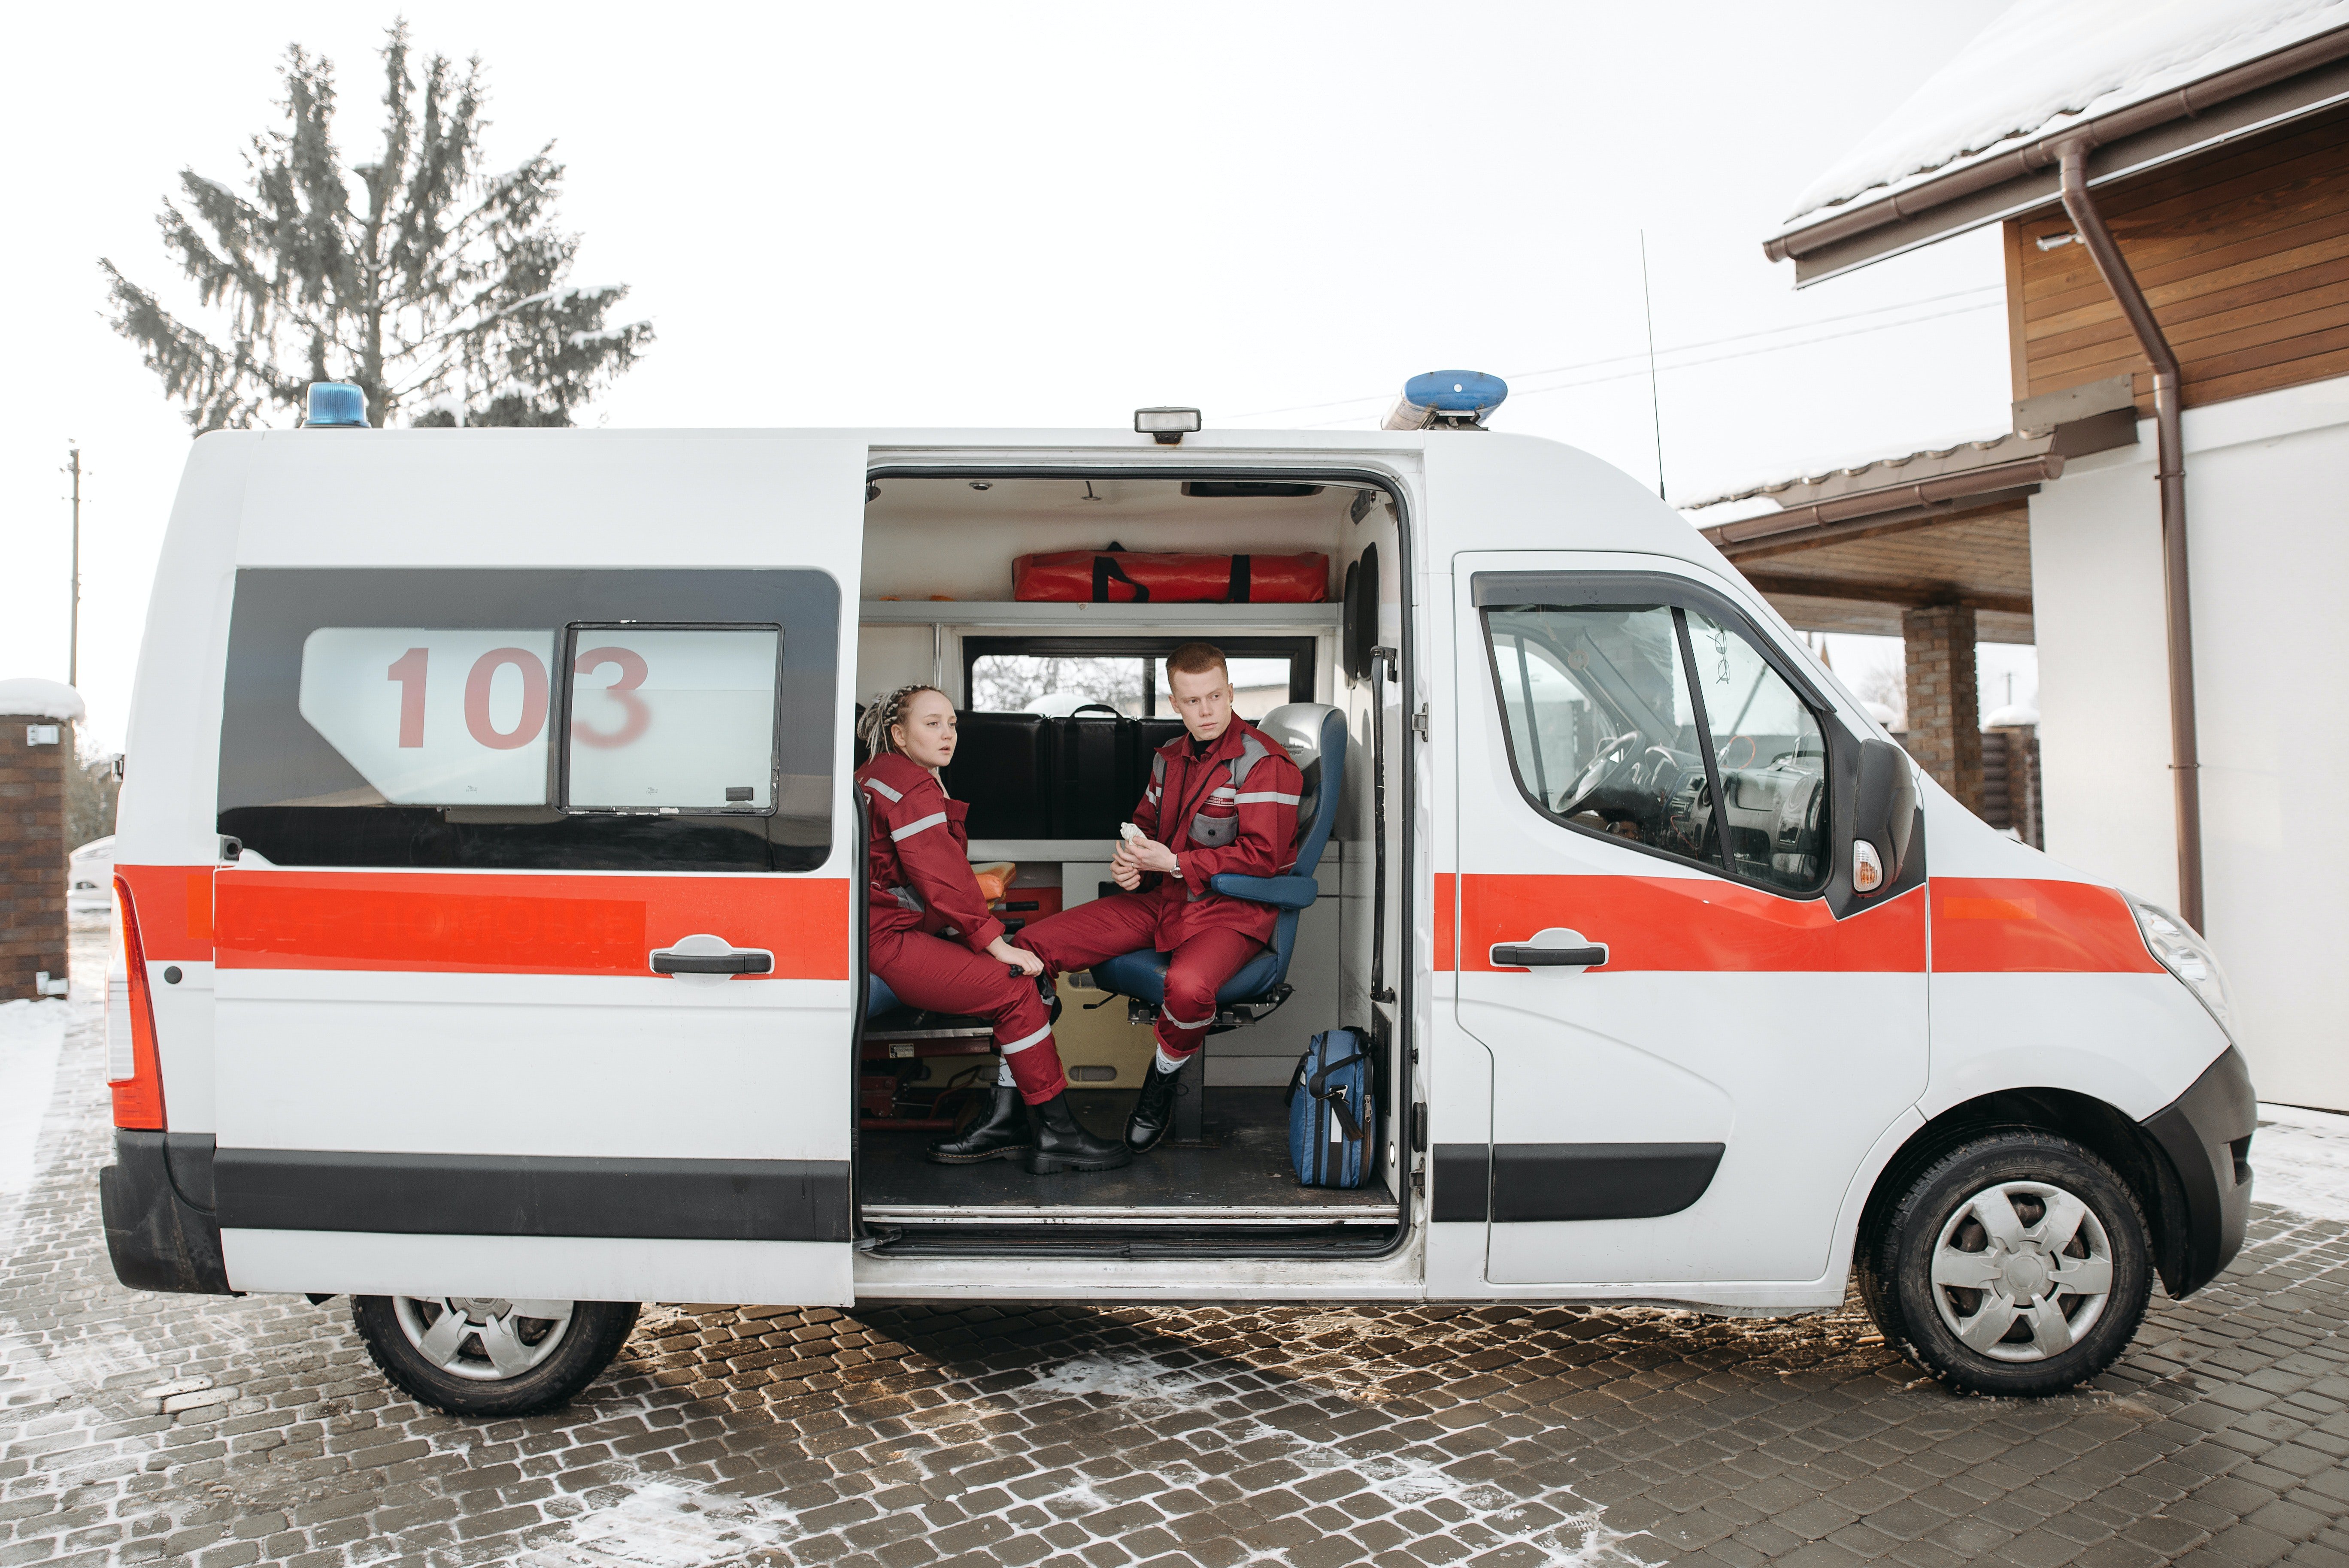 I found myself in an ambulance when I opened my eyes | Photo: Pexels